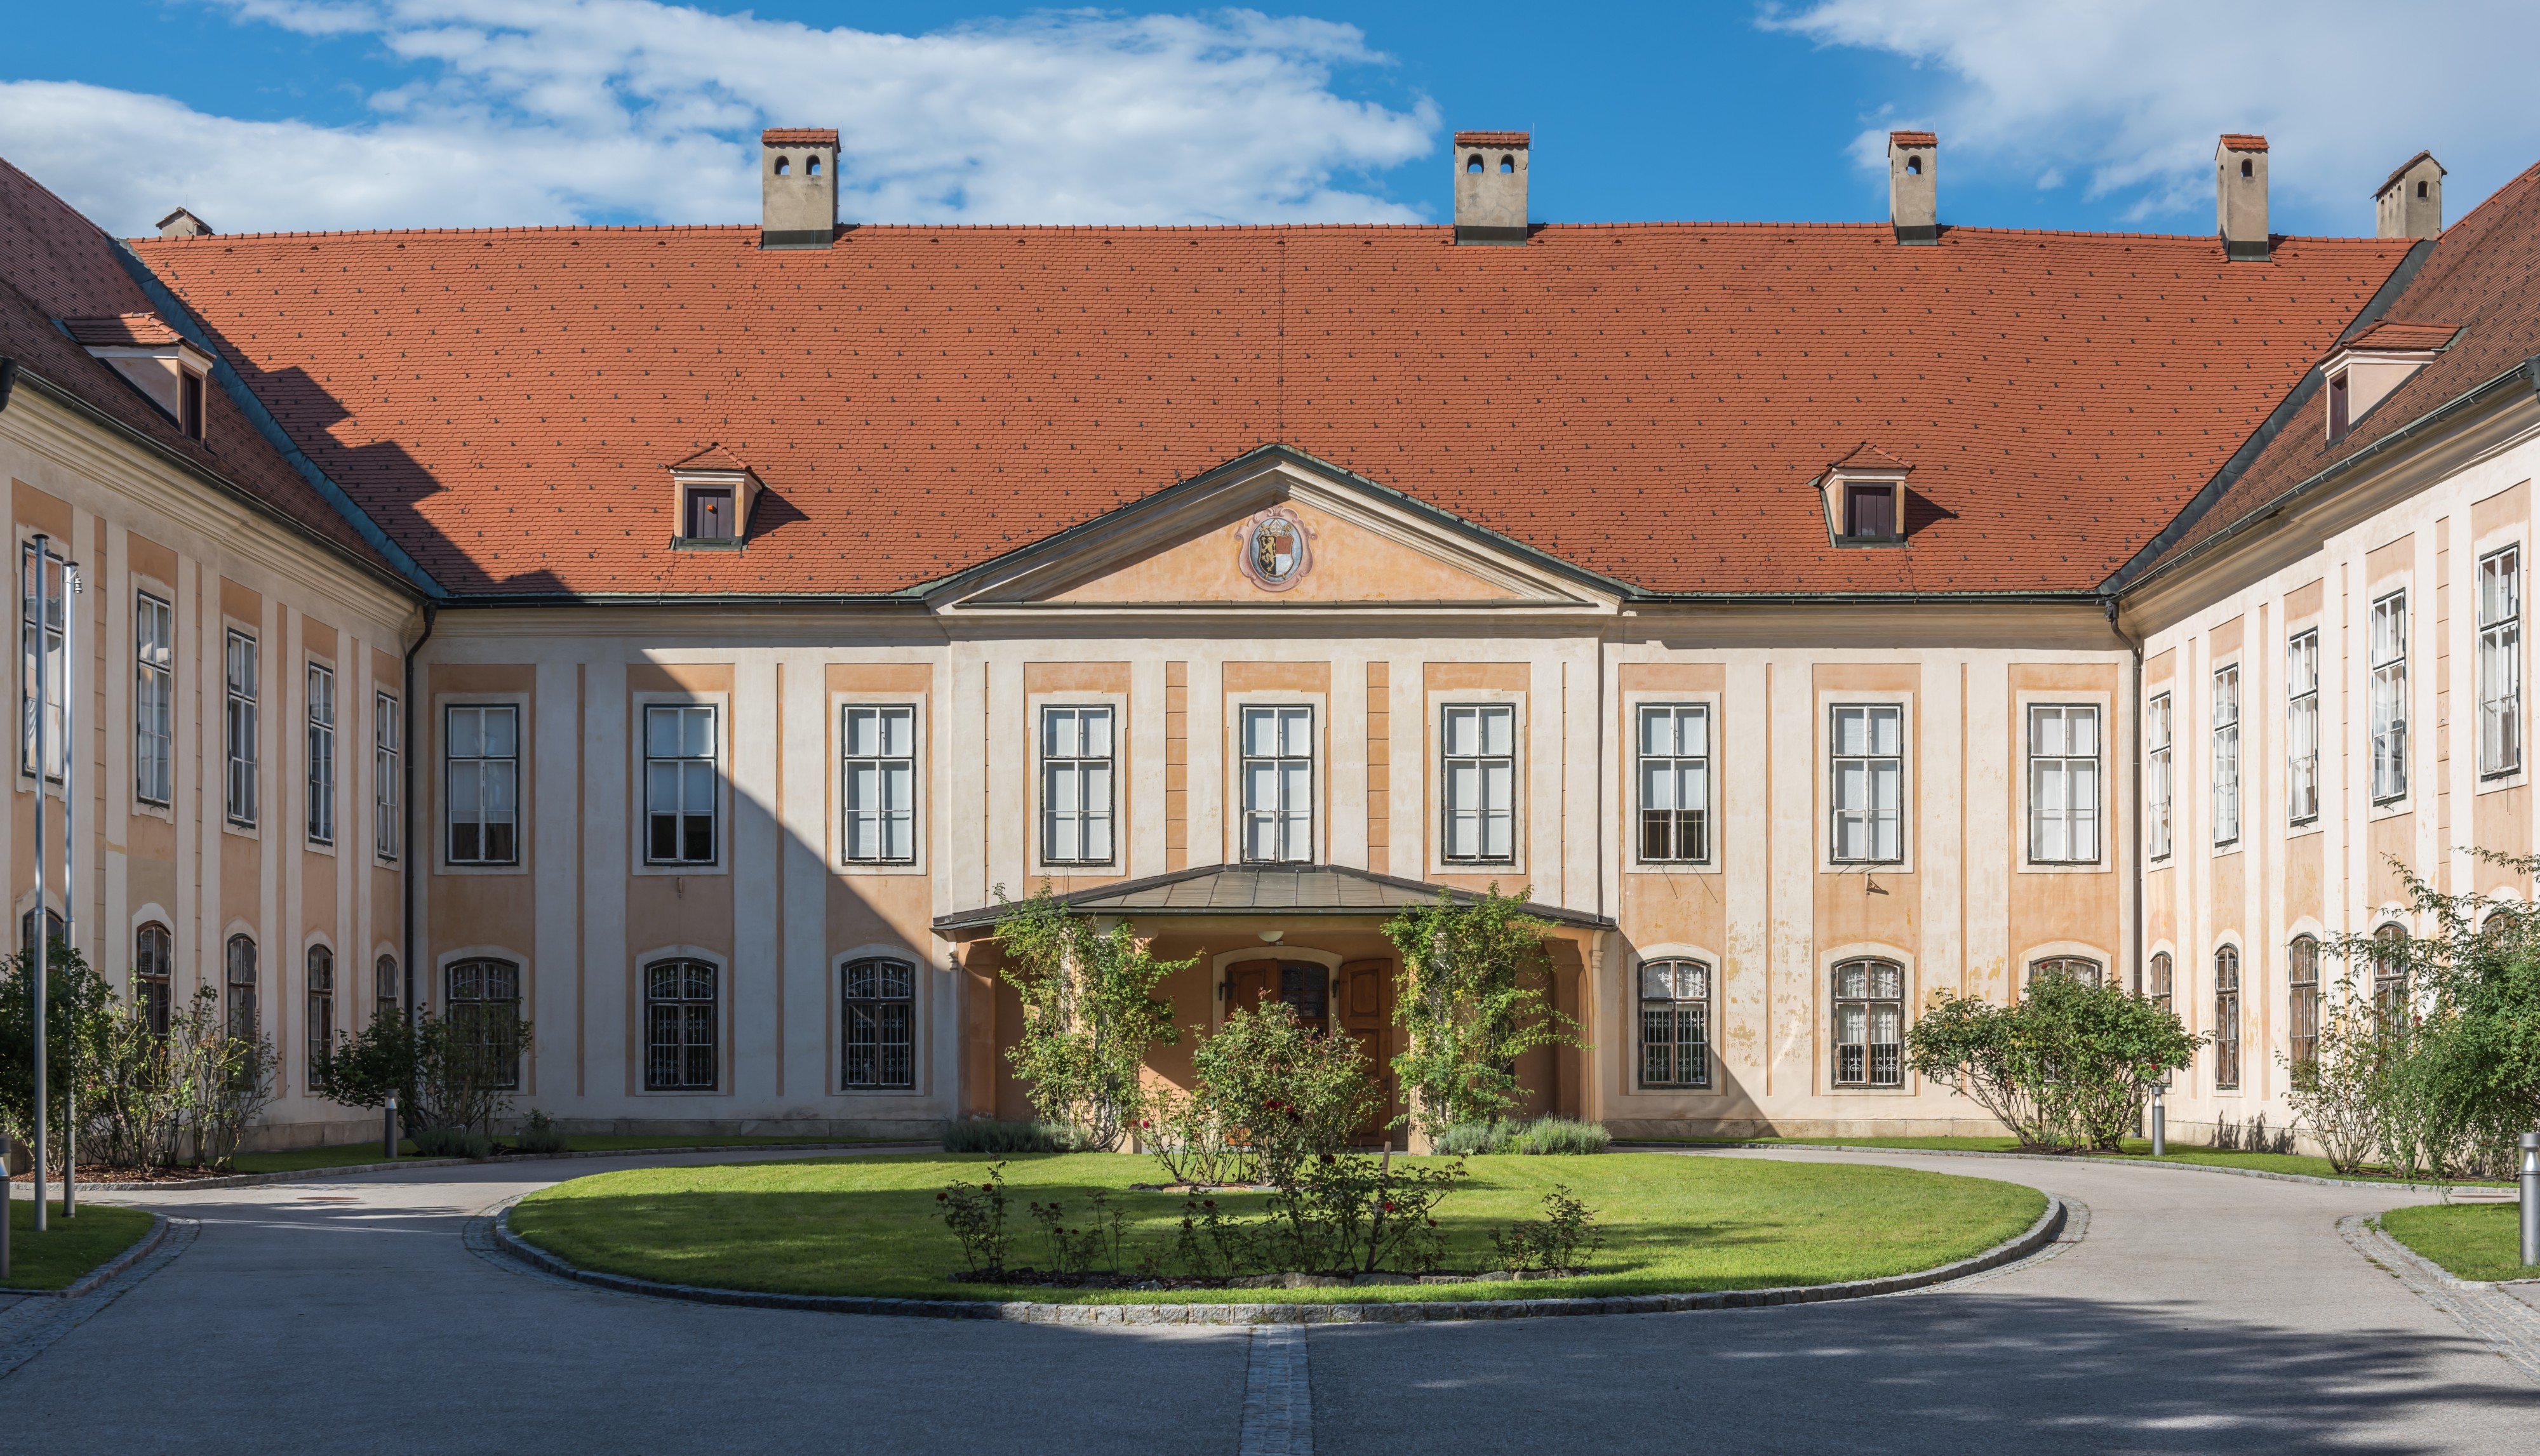 Резиденция архиепископа в вюрцбурге, шедевр барокко | tourpedia.ru